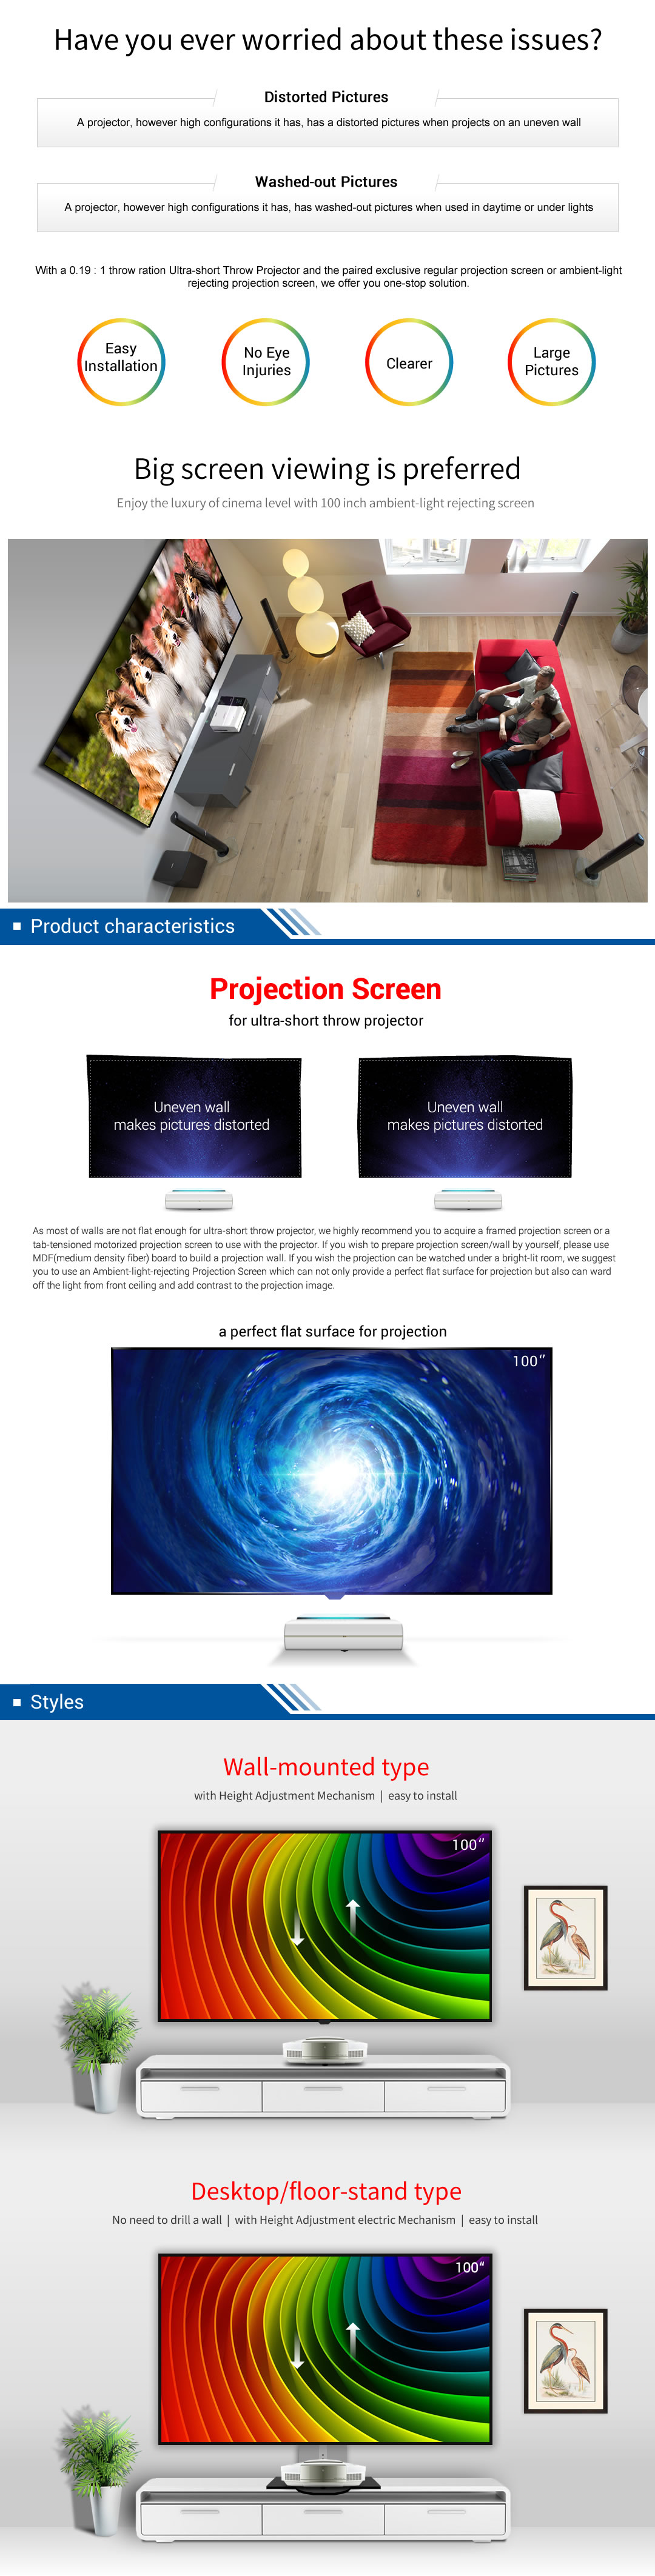 Projection Screen.jpg